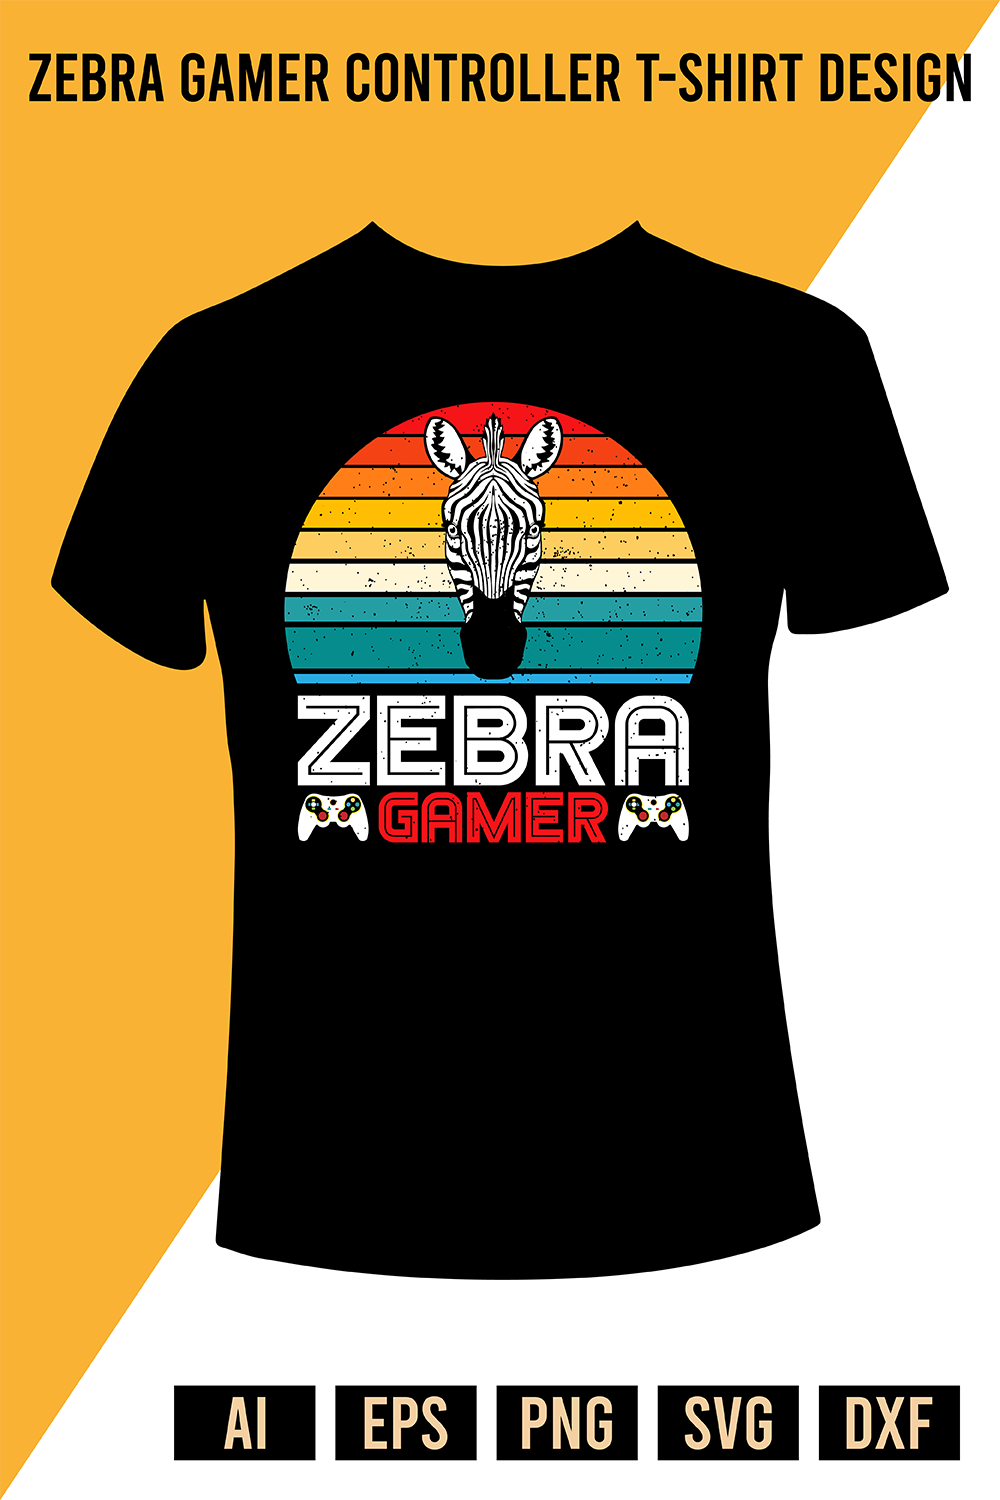 Zebra Gamer Controller T-Shirt Design pinterest preview image.